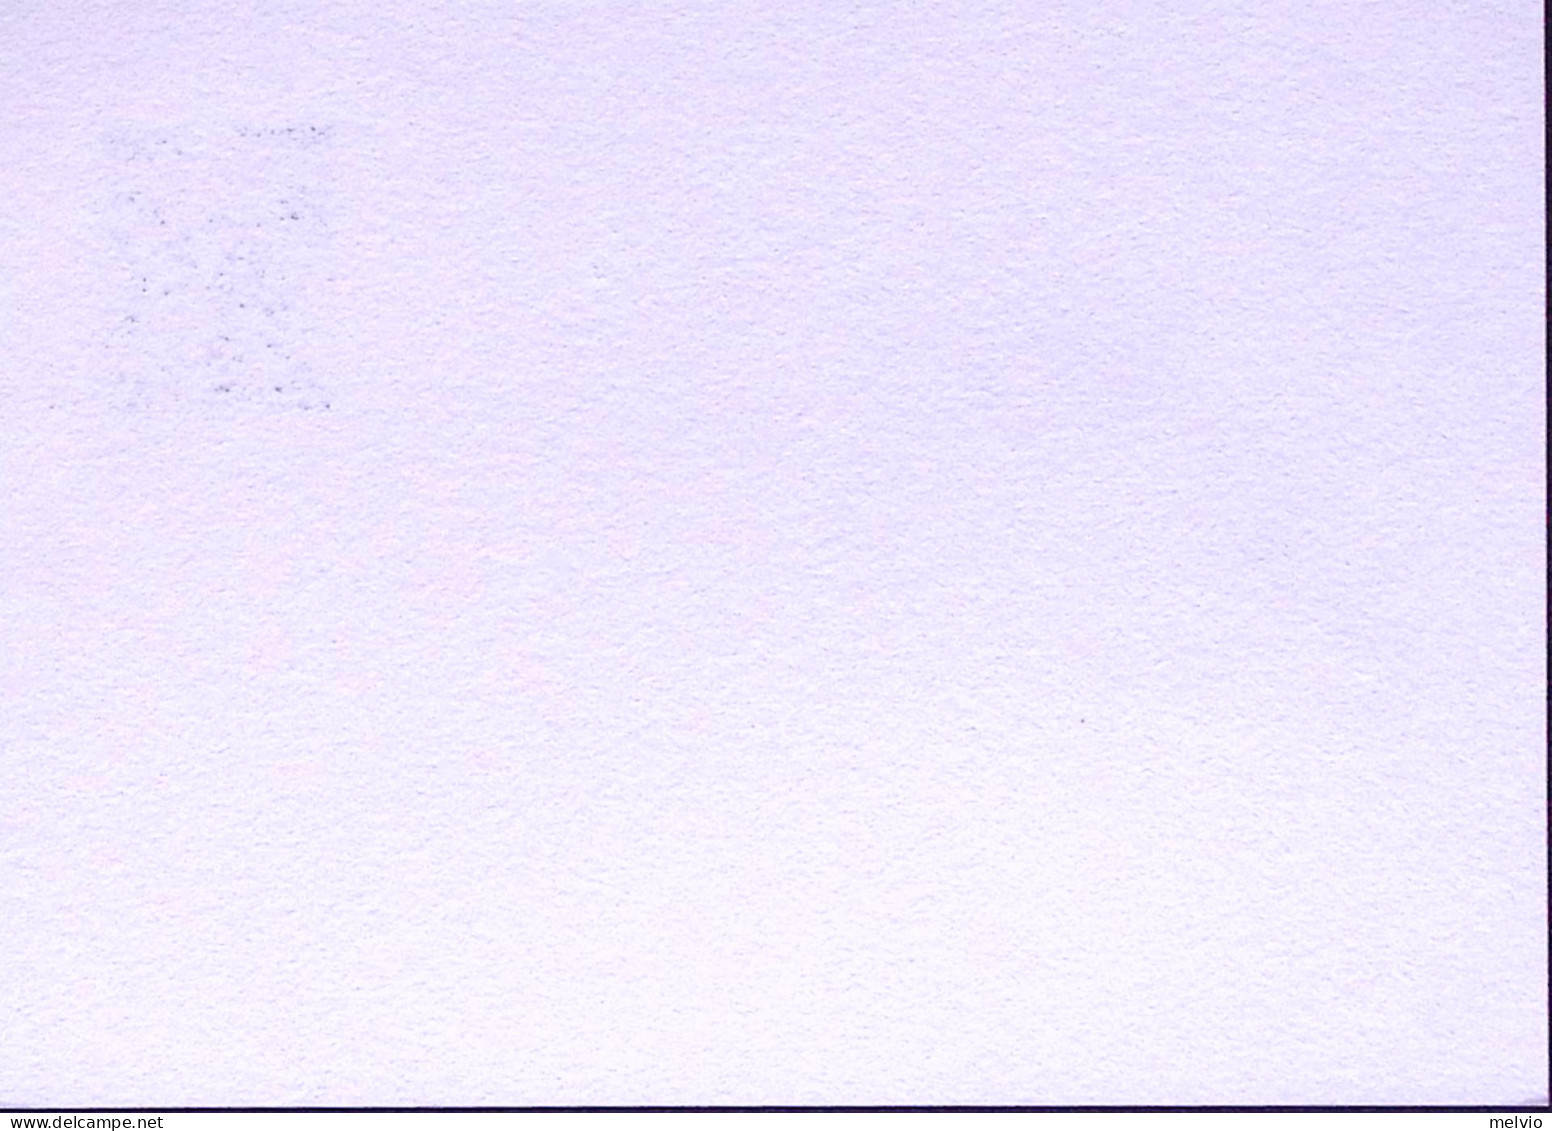 1992-MOSTRA NAZ. FILATELIA Cartolina Postale Lire 700 Soprastampata I.P.Z.S. Nuo - Ganzsachen